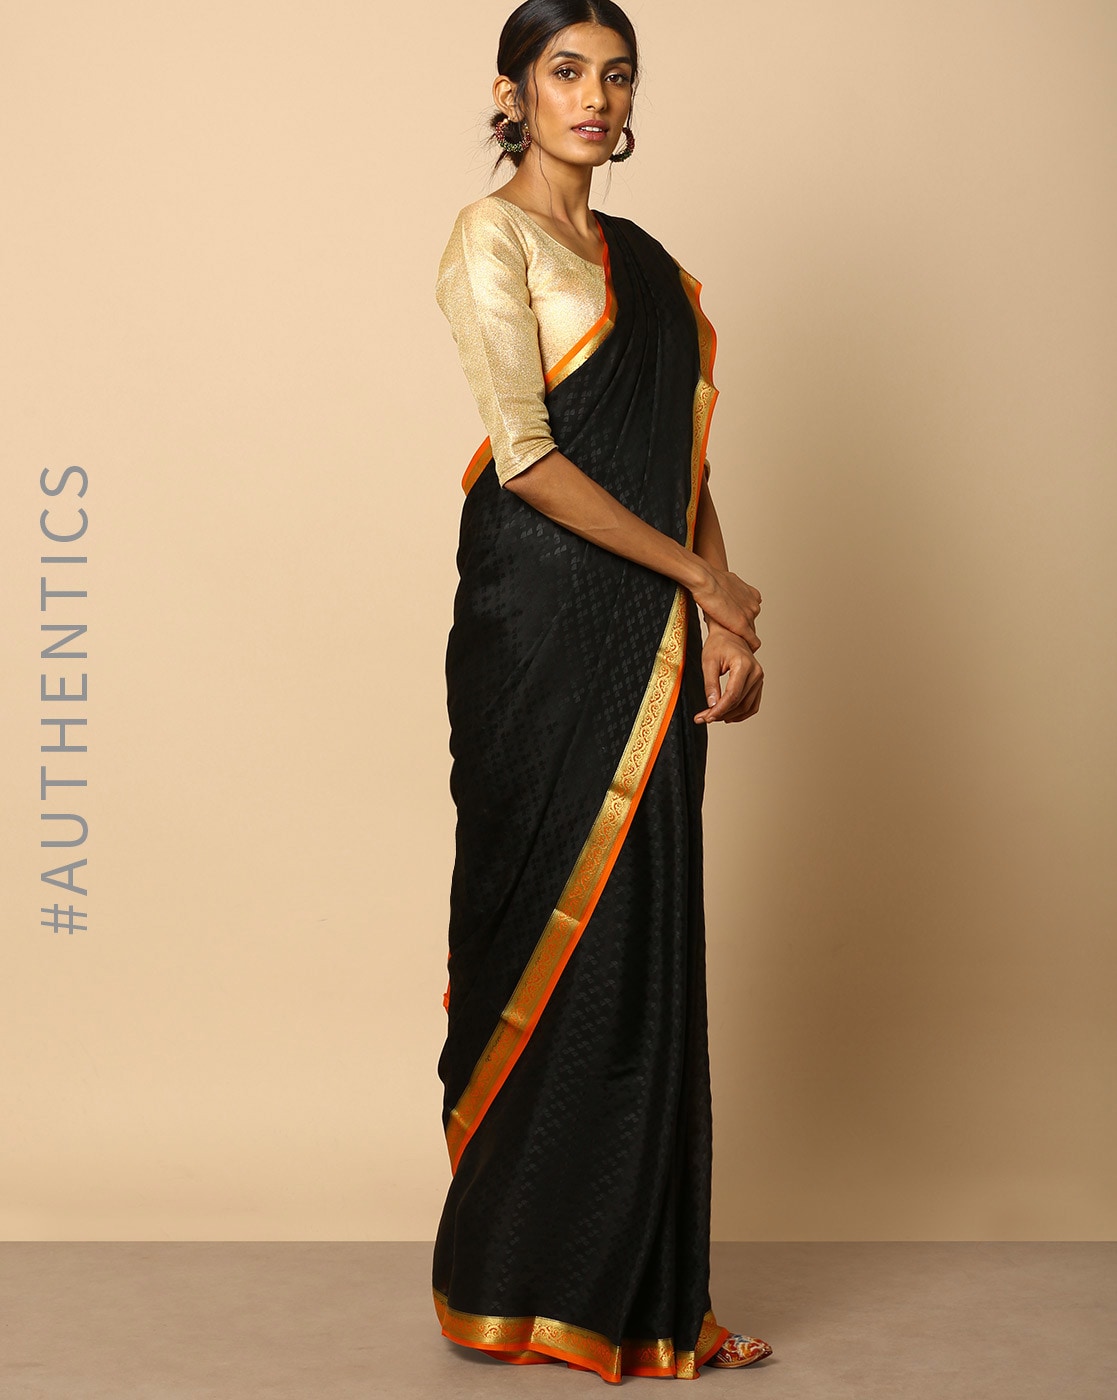 Amala in Black Mysore Silk Saree at Jr Ntr and Laxmi Pranathi Wedding  Function - Saree Blouse Patterns